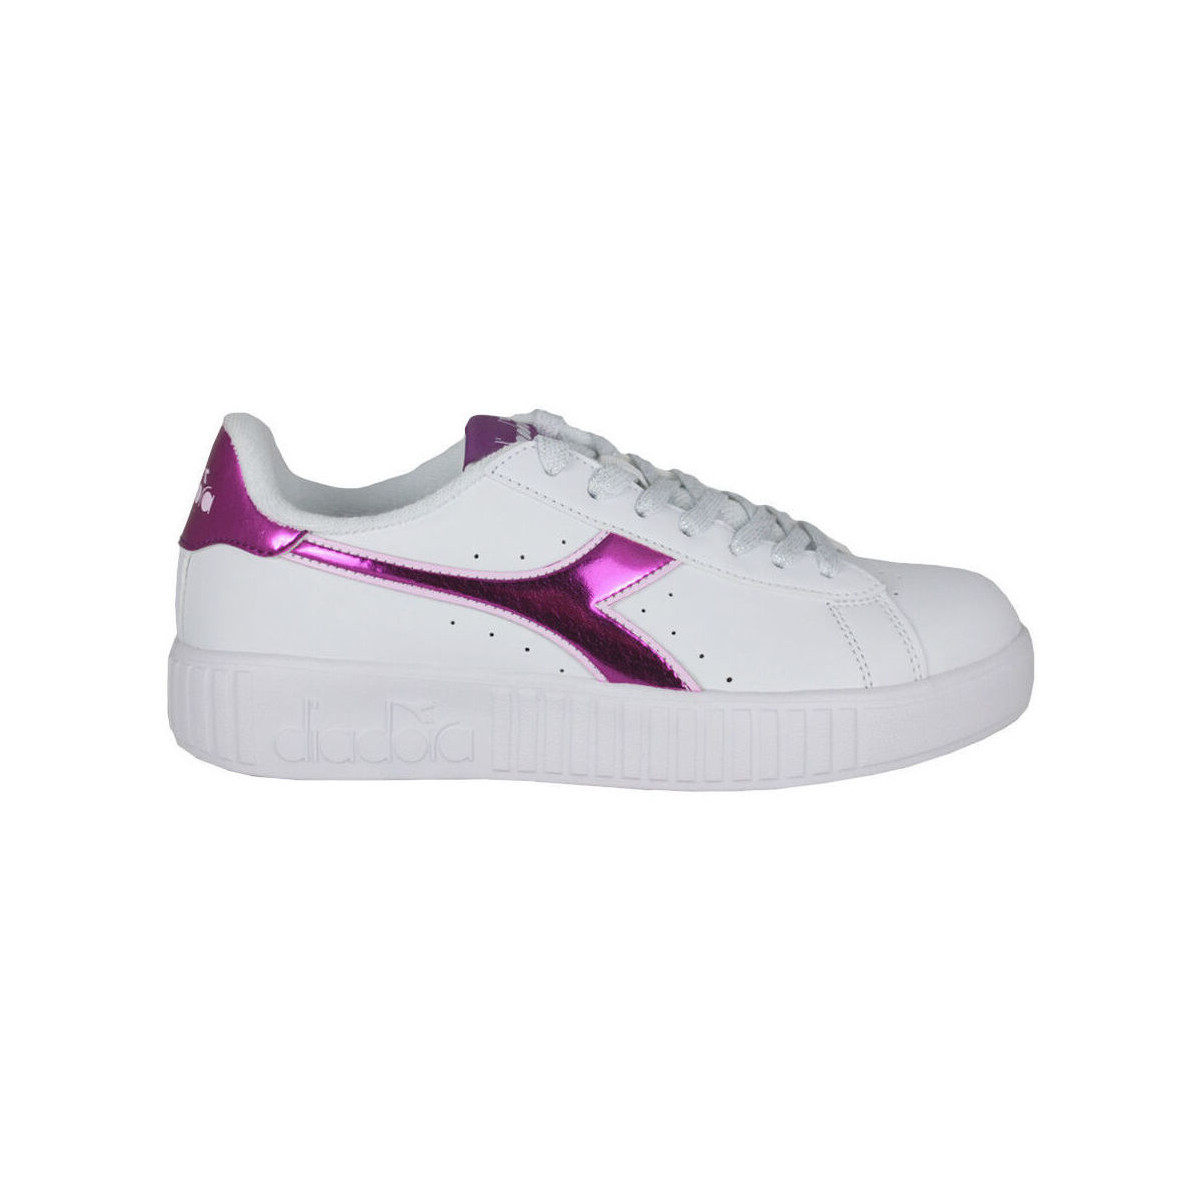 Sneakers Diadora Game p step 101.176737 01 55052 Violet raspberry